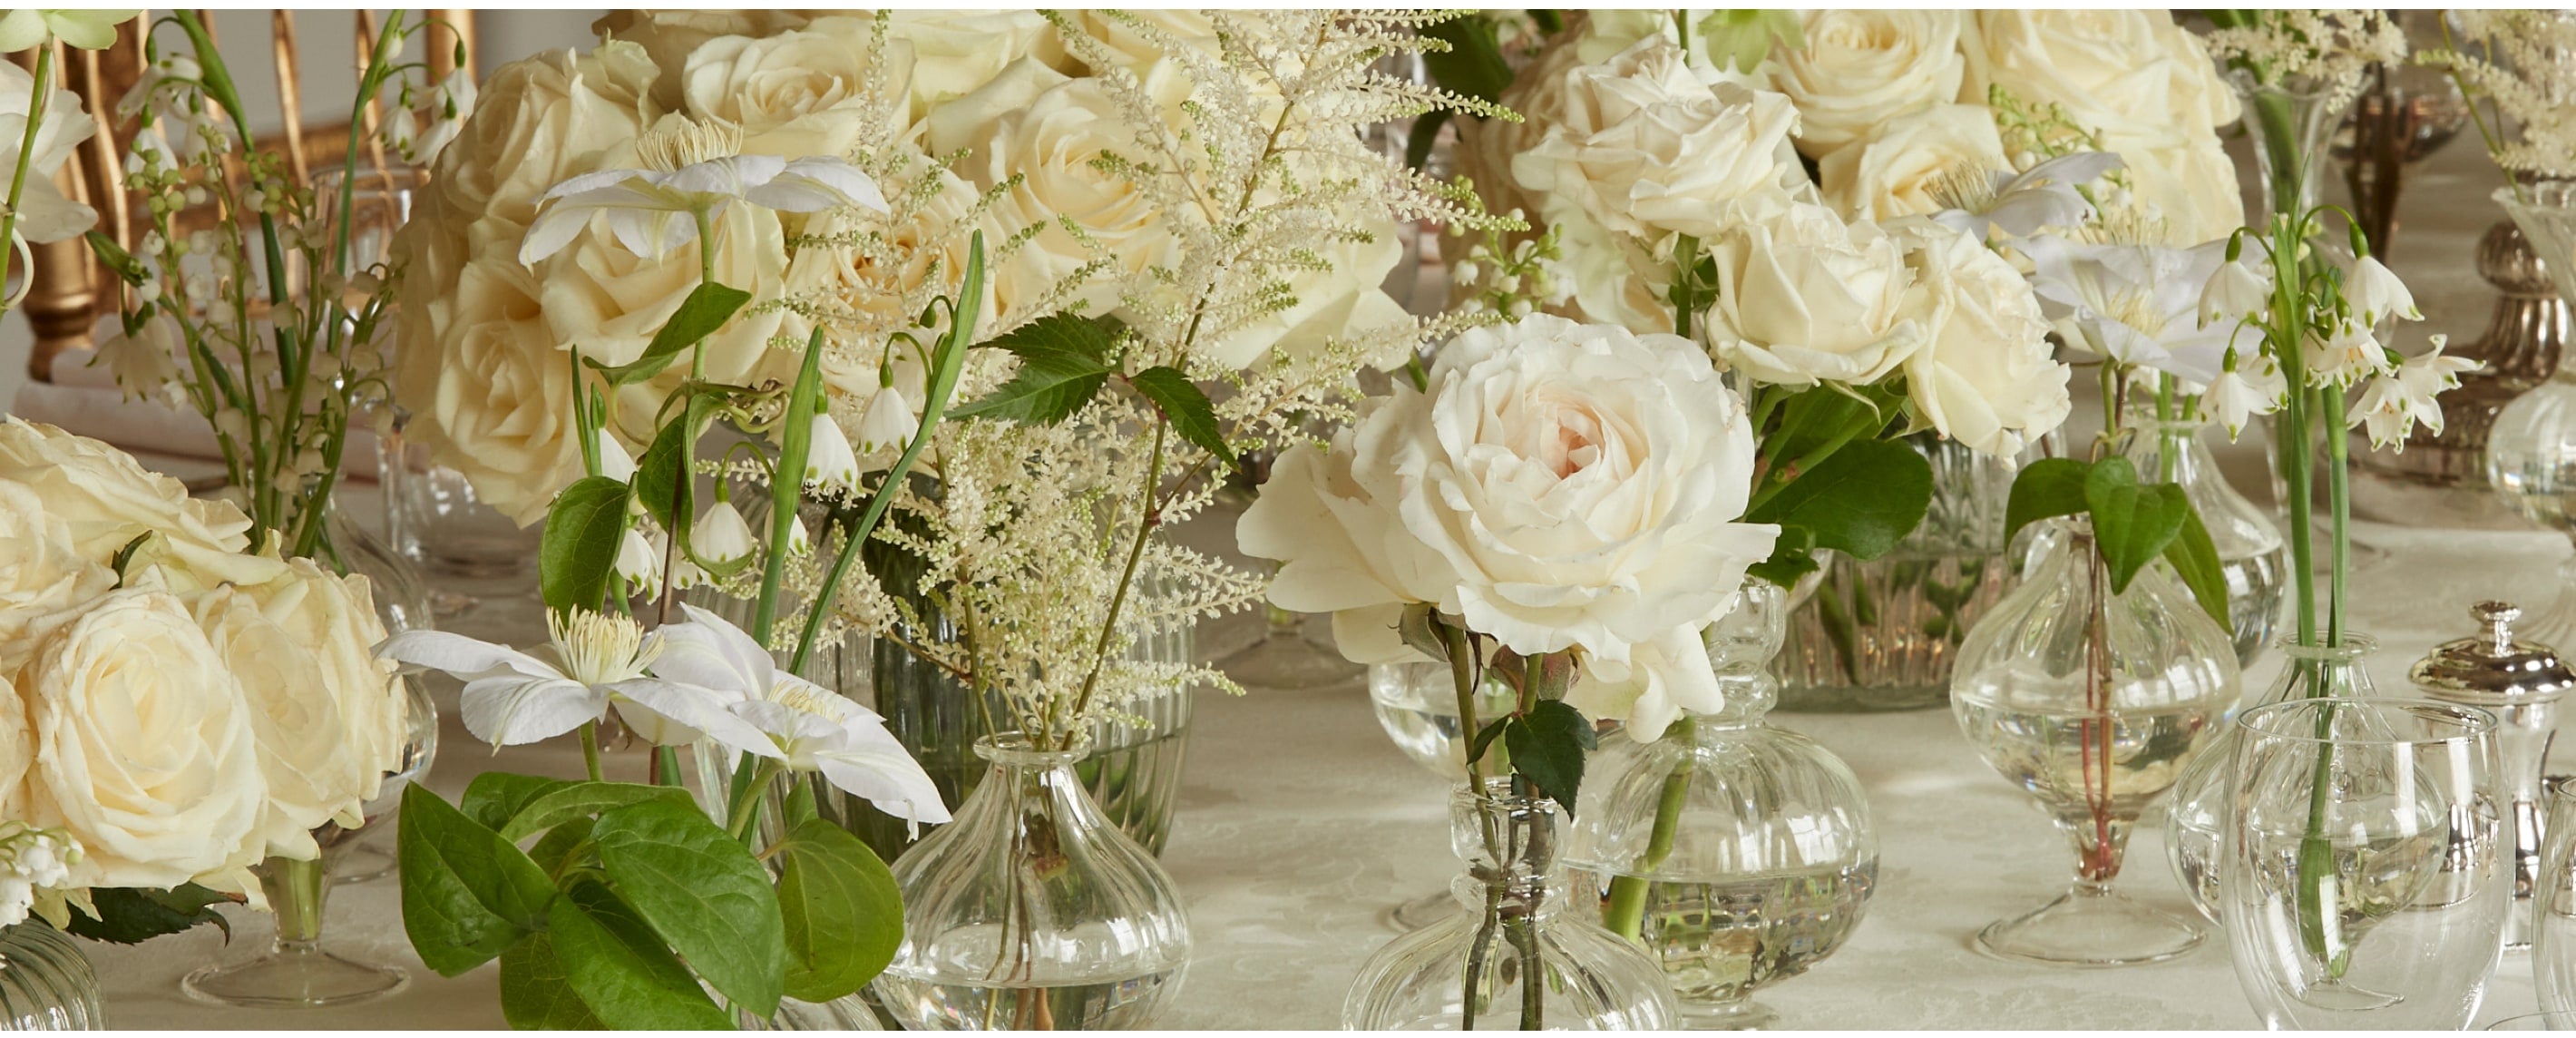 White wedding flowers table display